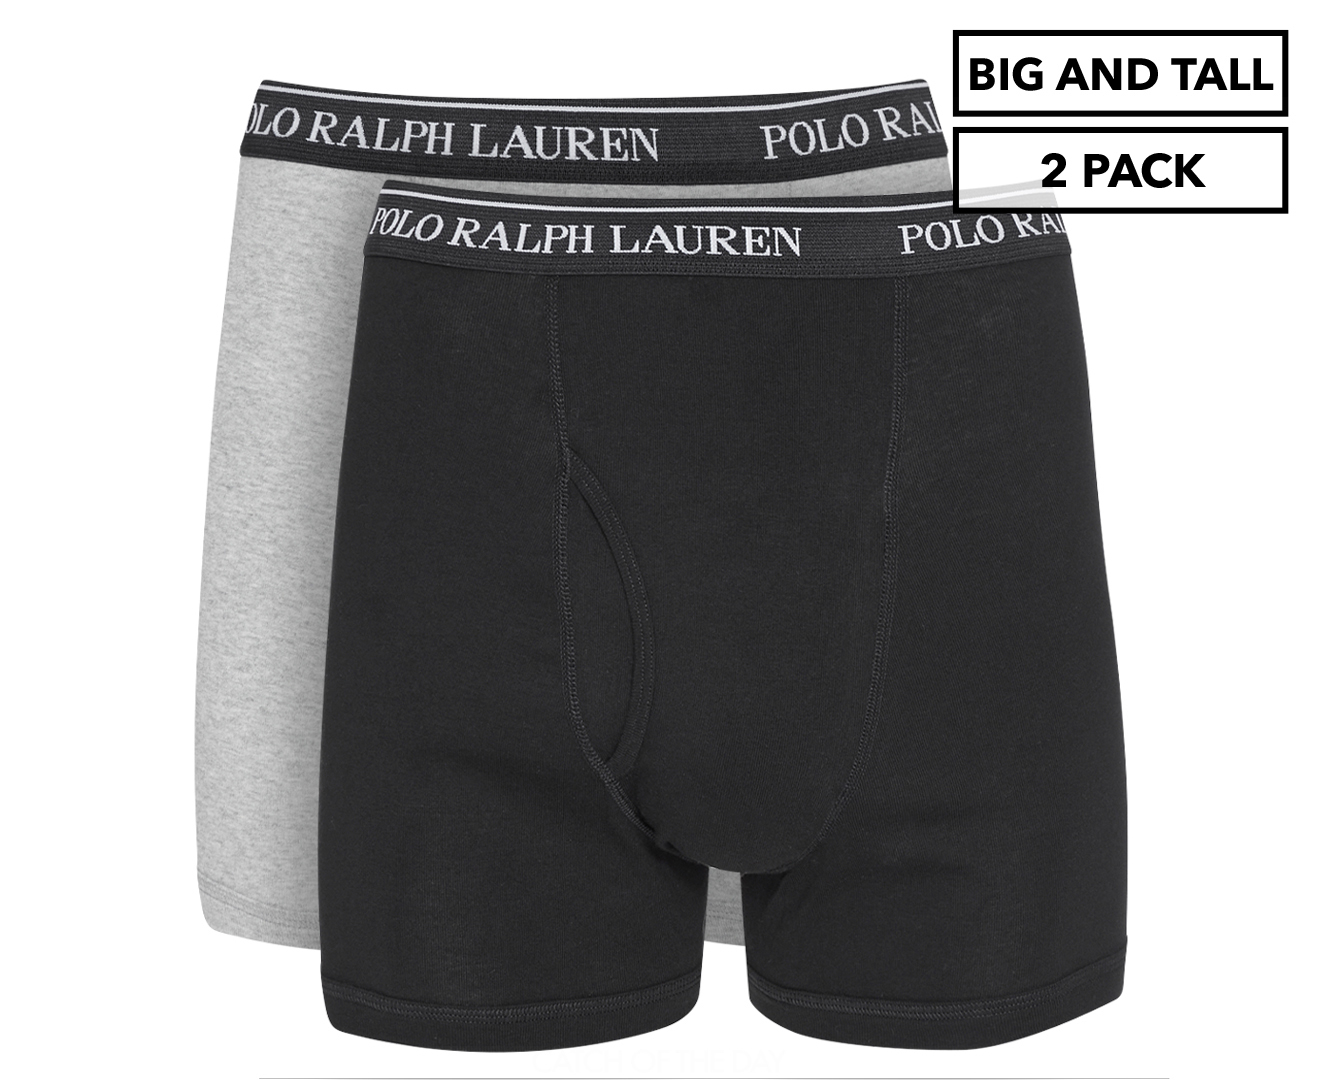 Polo Ralph Lauren Men's Big & Tall Boxer Brief 2-Pack - Grey/Black ...